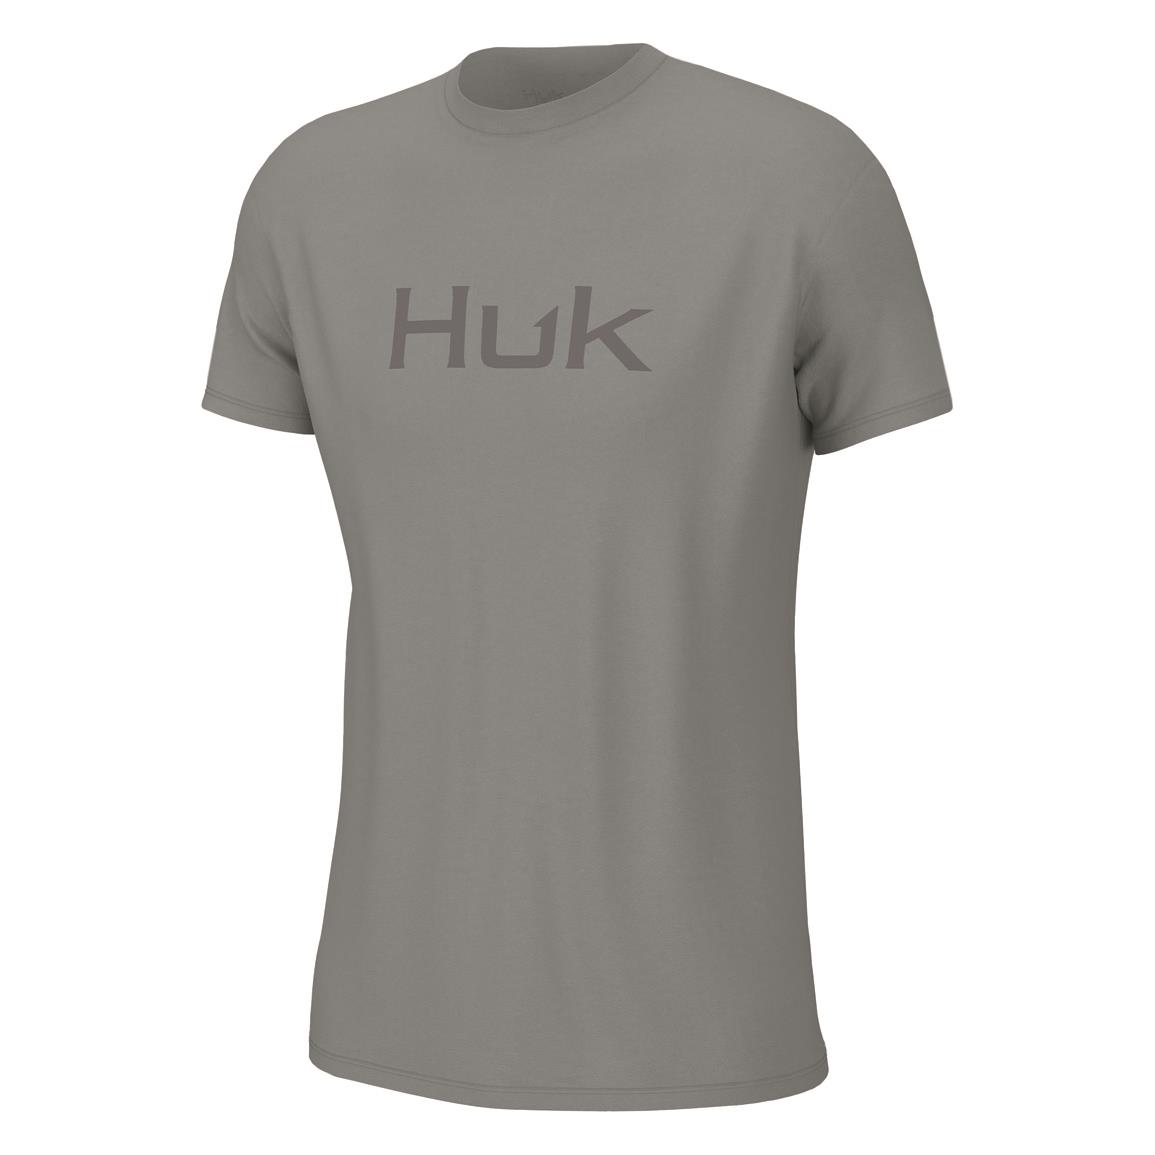 Huk Youth Logo Tee, Harbor Mist